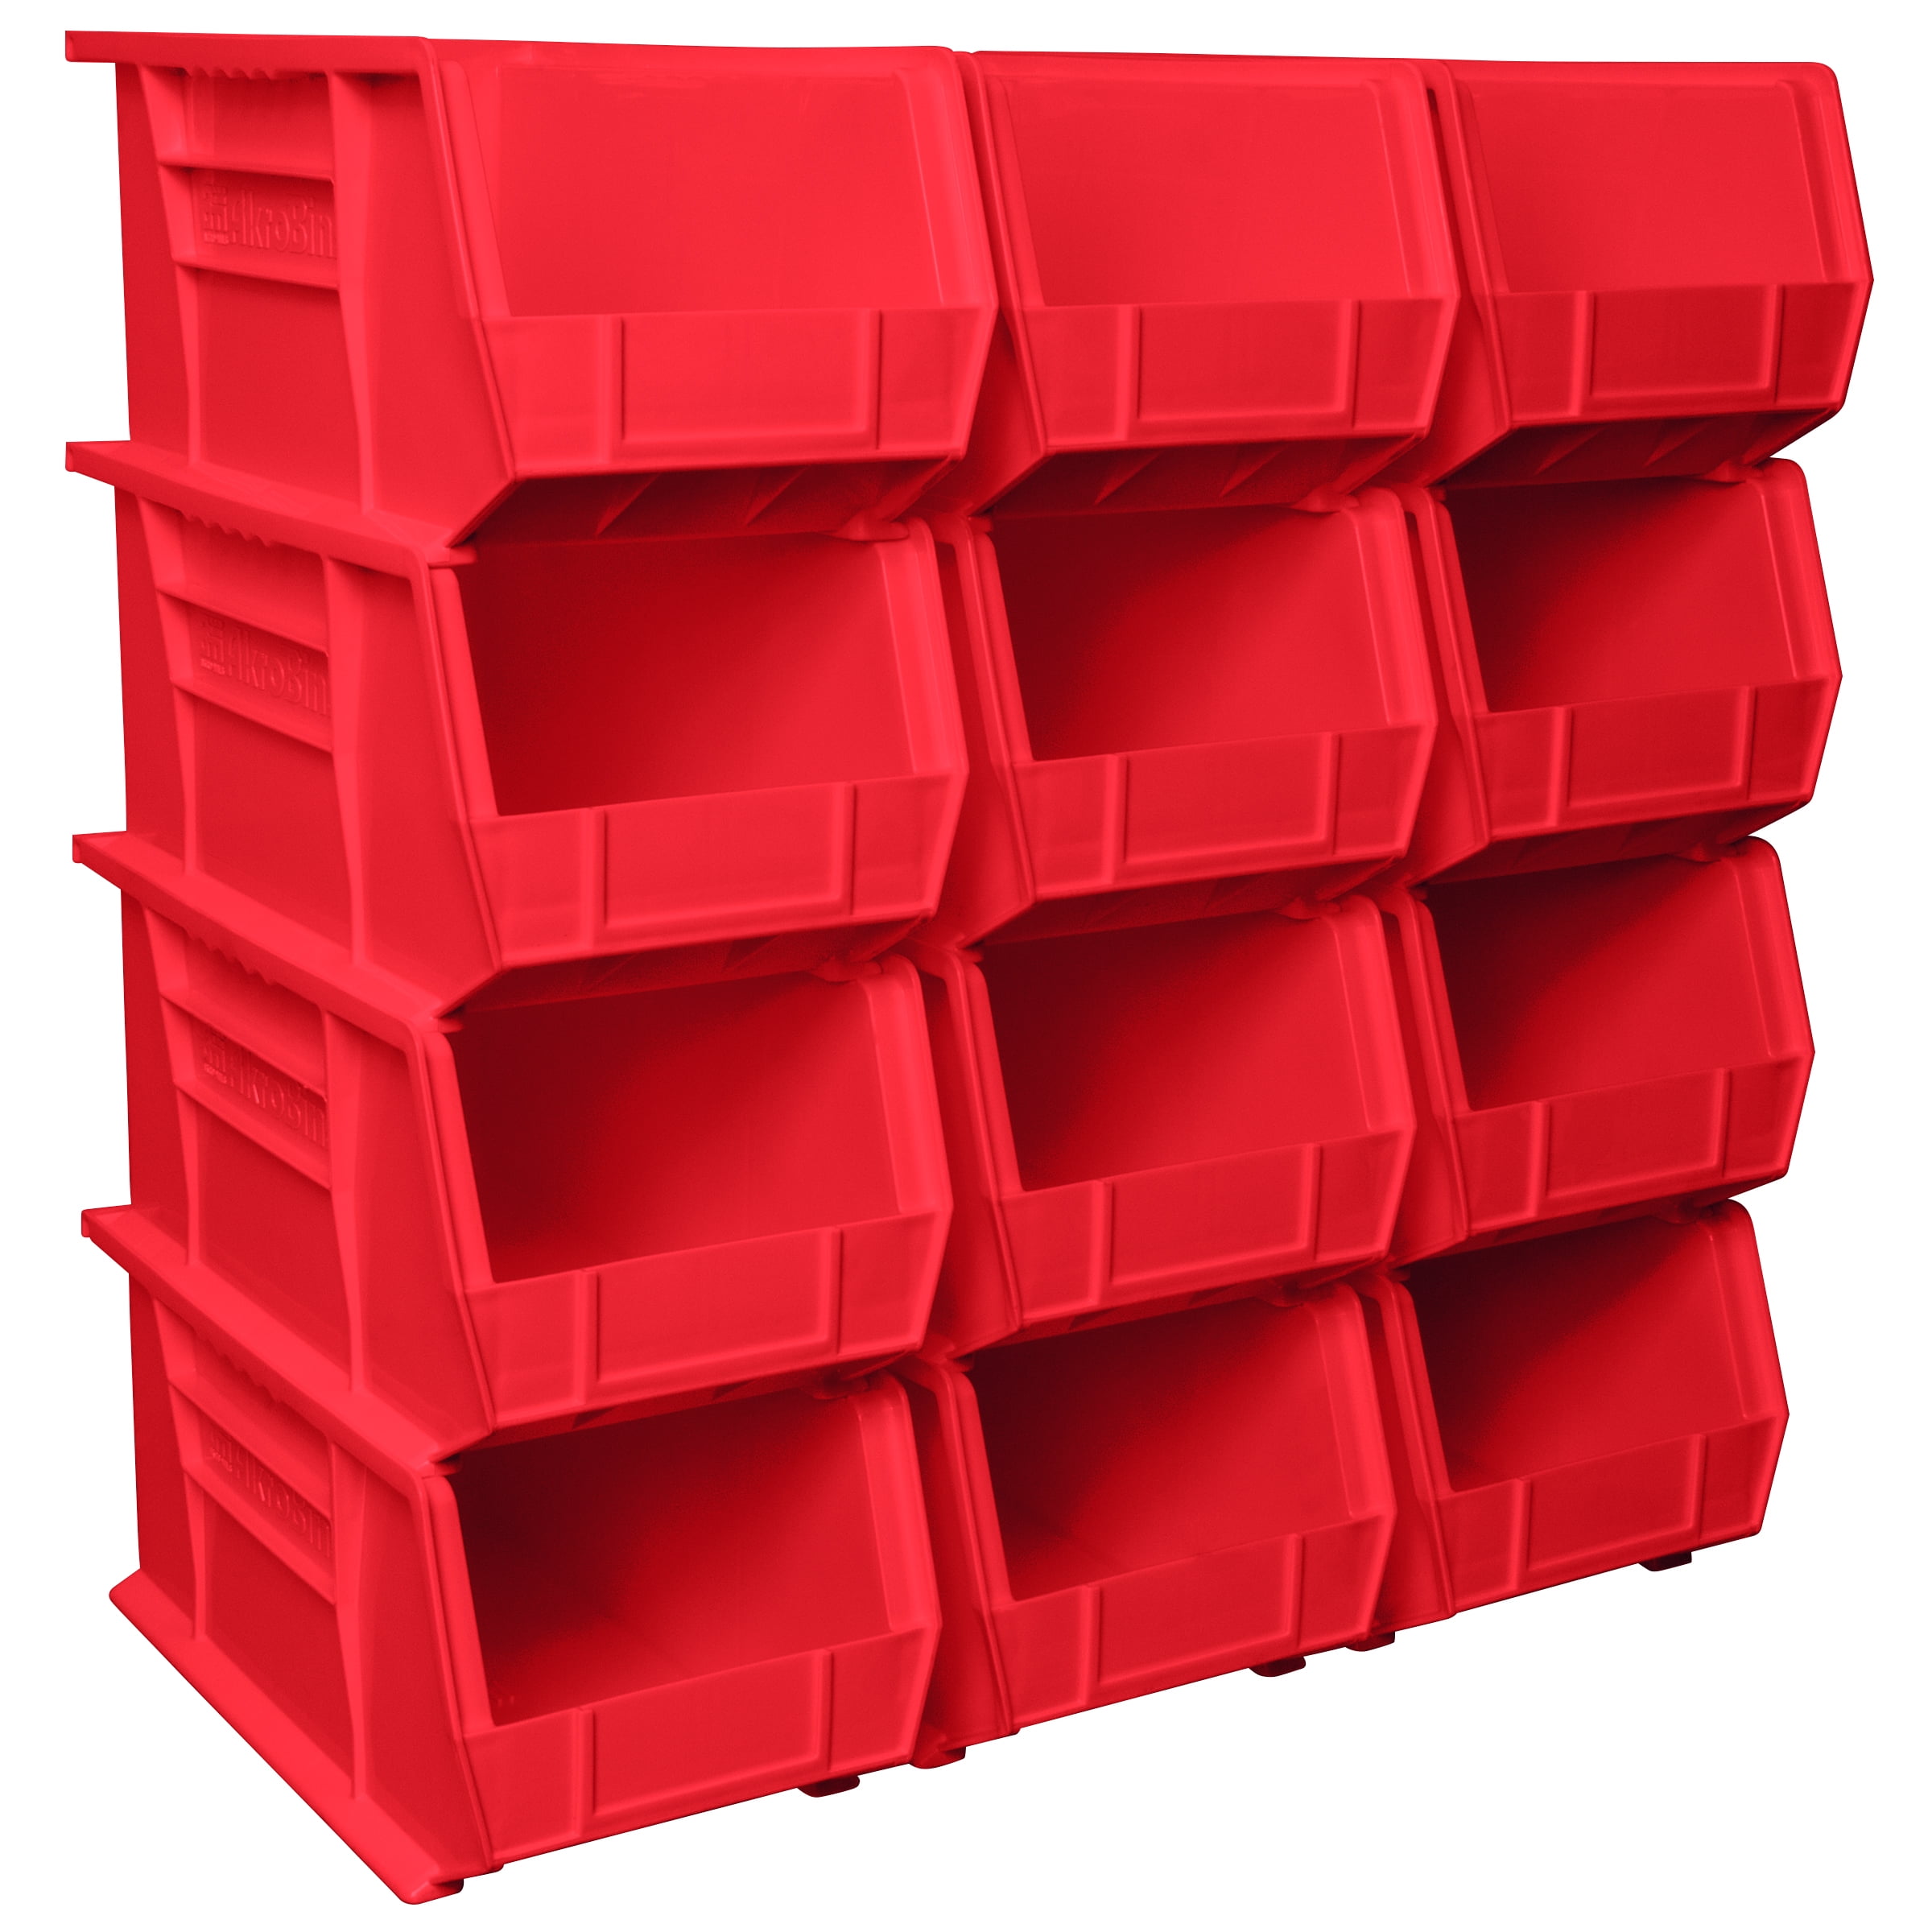 Akro-Mils AkroBins Extra Large Storage Bins Capacity: 100 lb.; 18 x 16.5